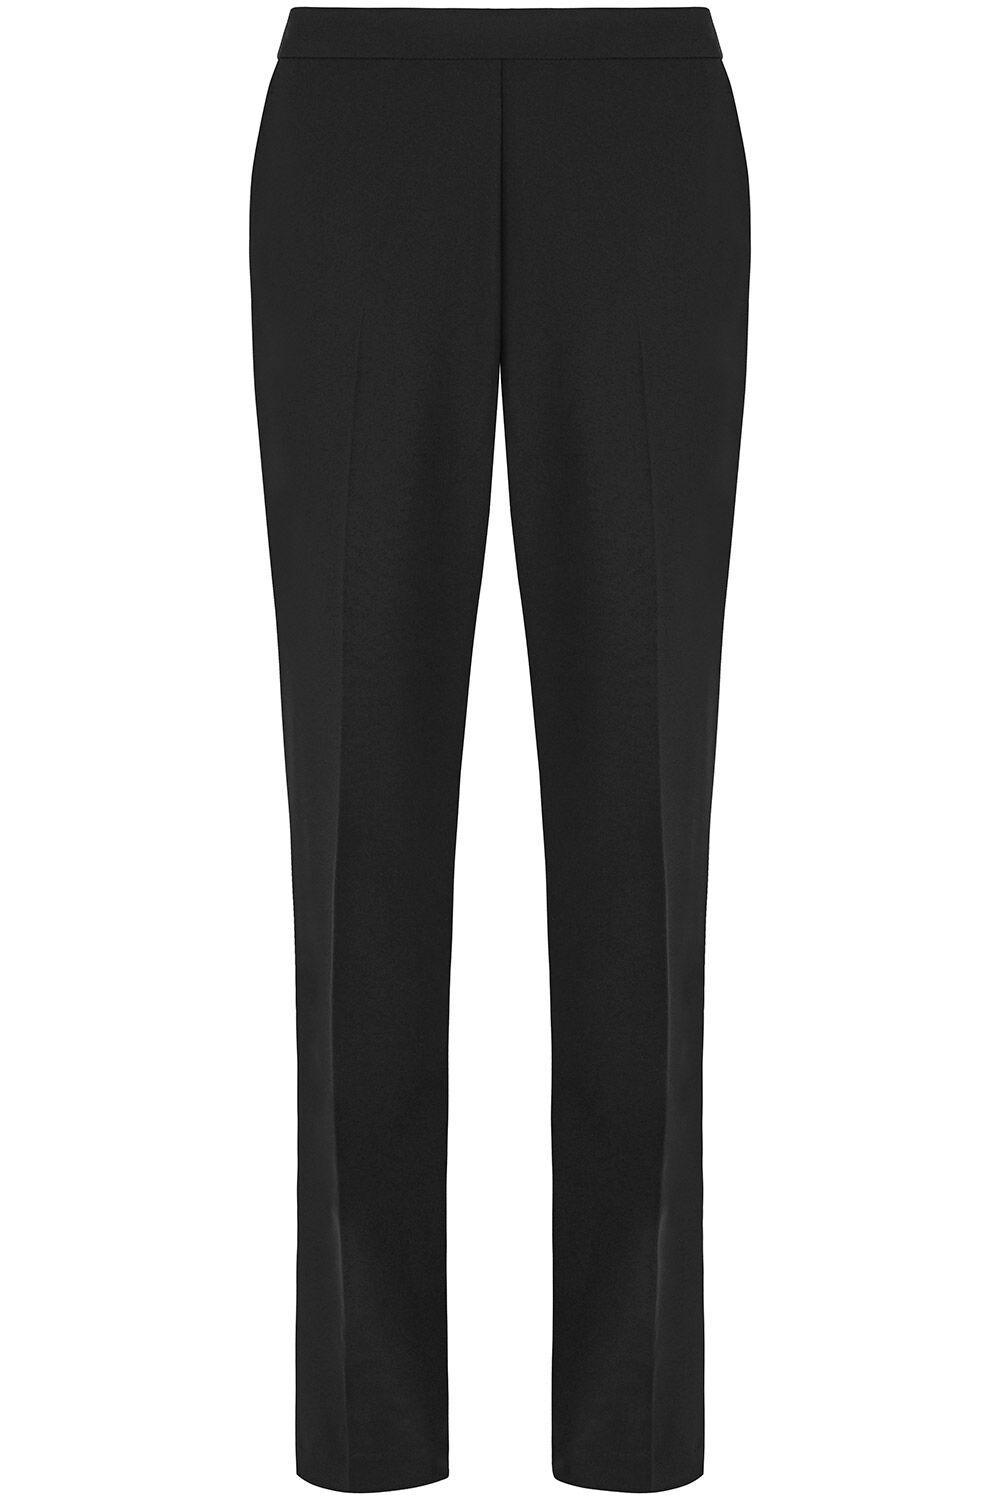 Bonmarche Plain Straight Leg Pull On Trouser - Black, Size: 24